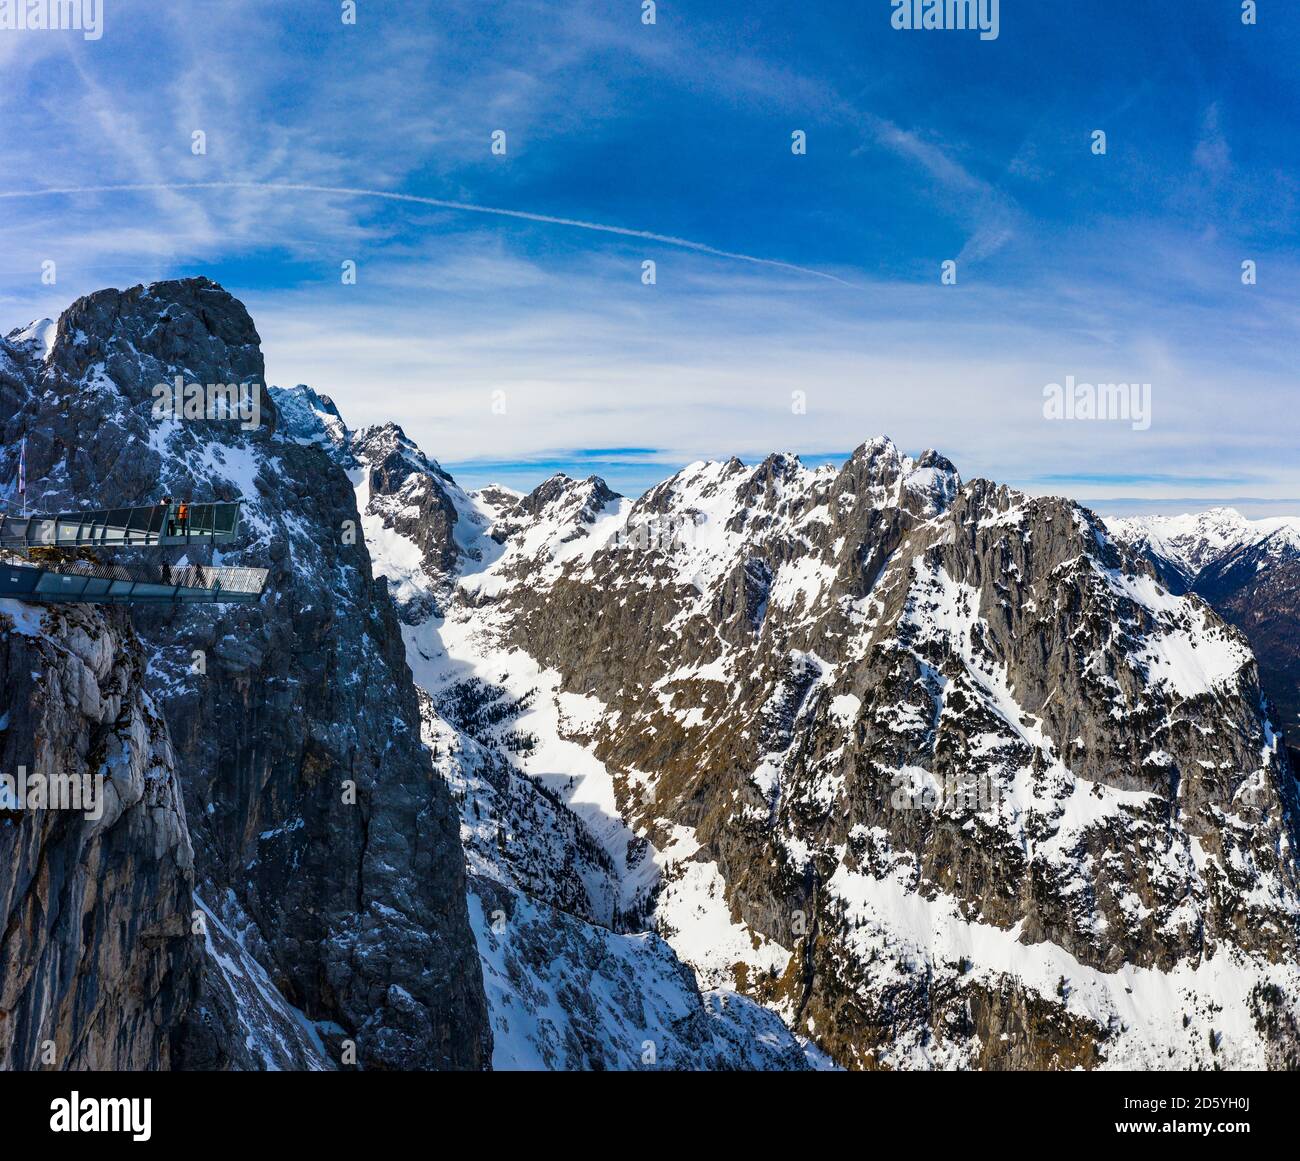 Germany, Bavaria, Mittenwald, Wetterstein mountains, Alpspitze, mountain station with AlpspiX viewing platform Stock Photo